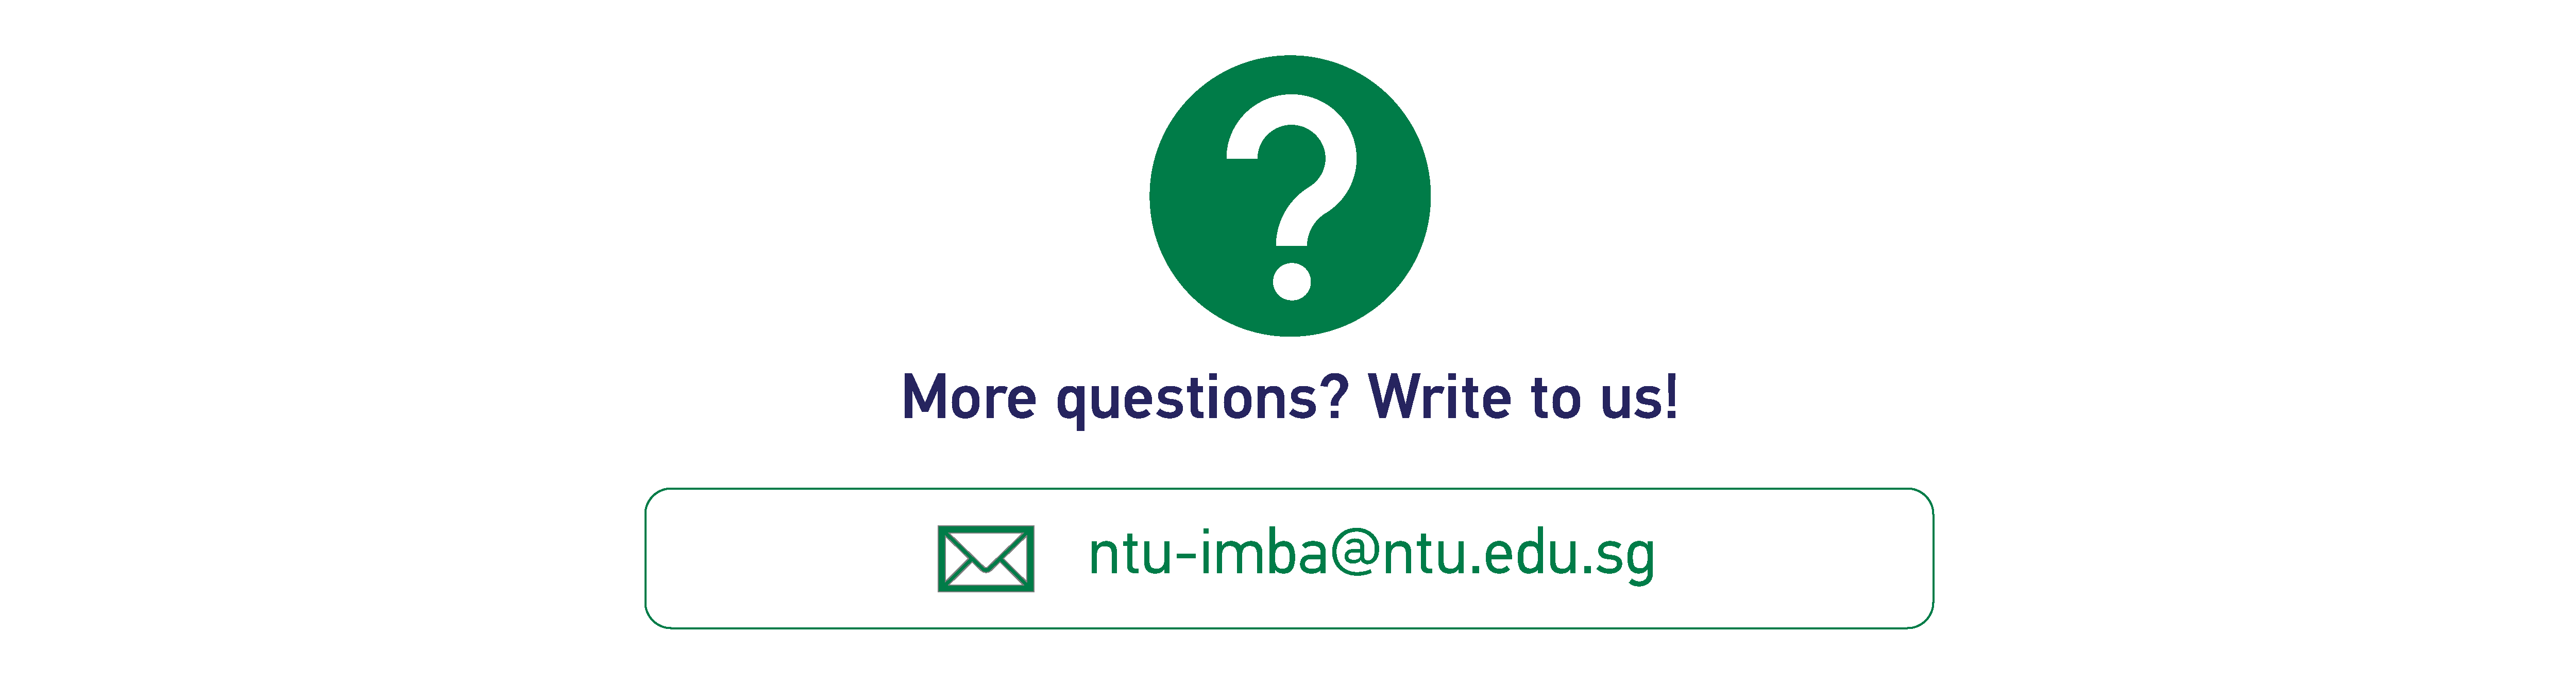 Email questions to ntu-imba@ntu.edu.sg 